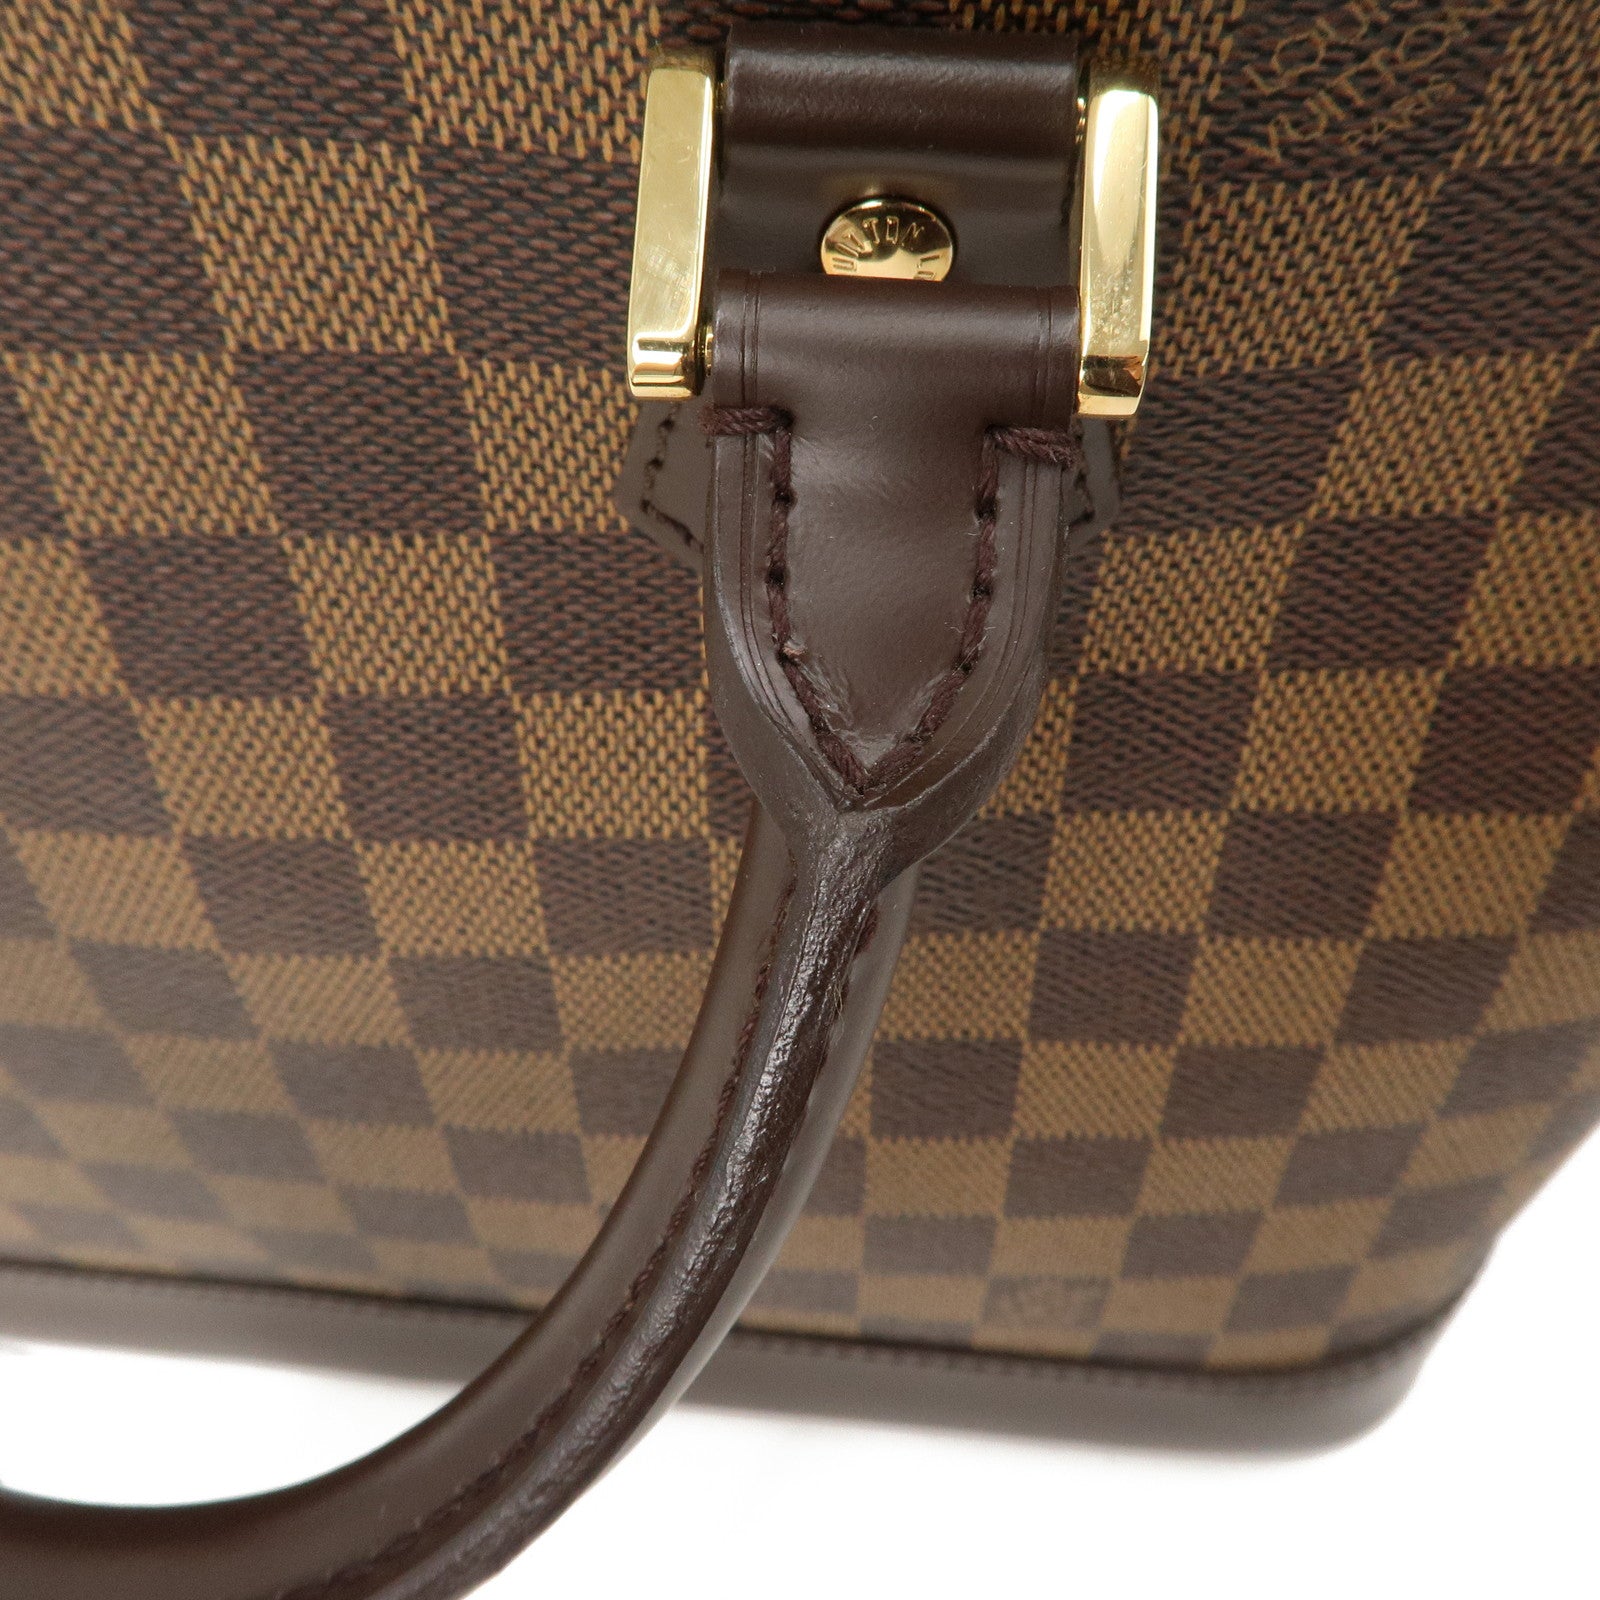 Louis-Vuitton Damier Alma PM Hand Bag